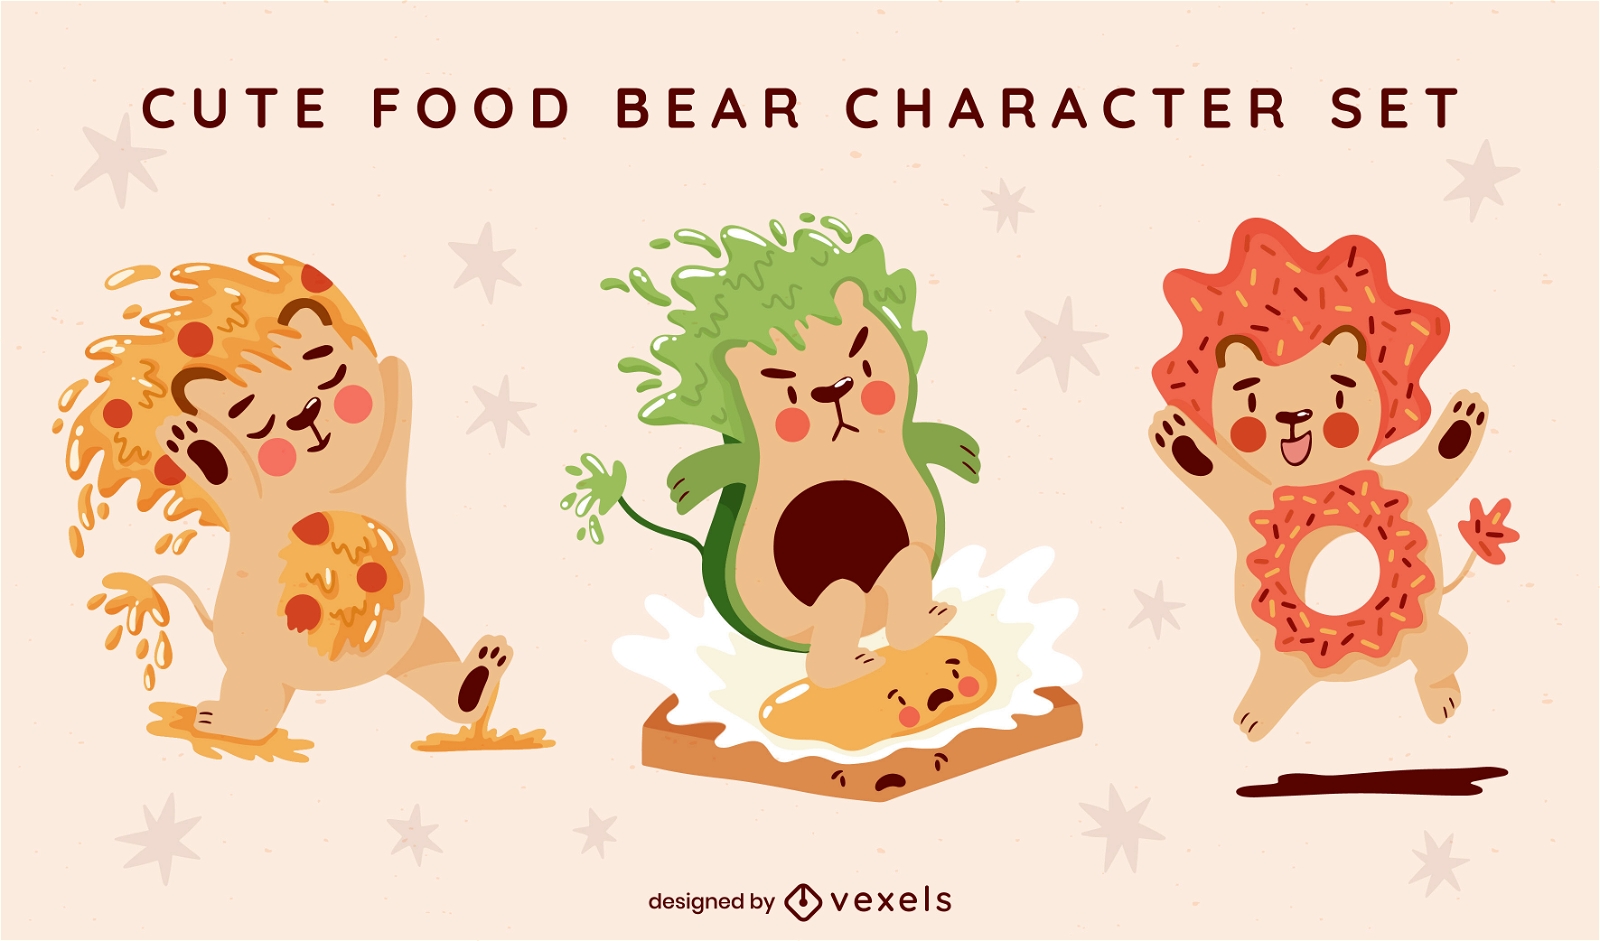 Bears animals as food cute character set